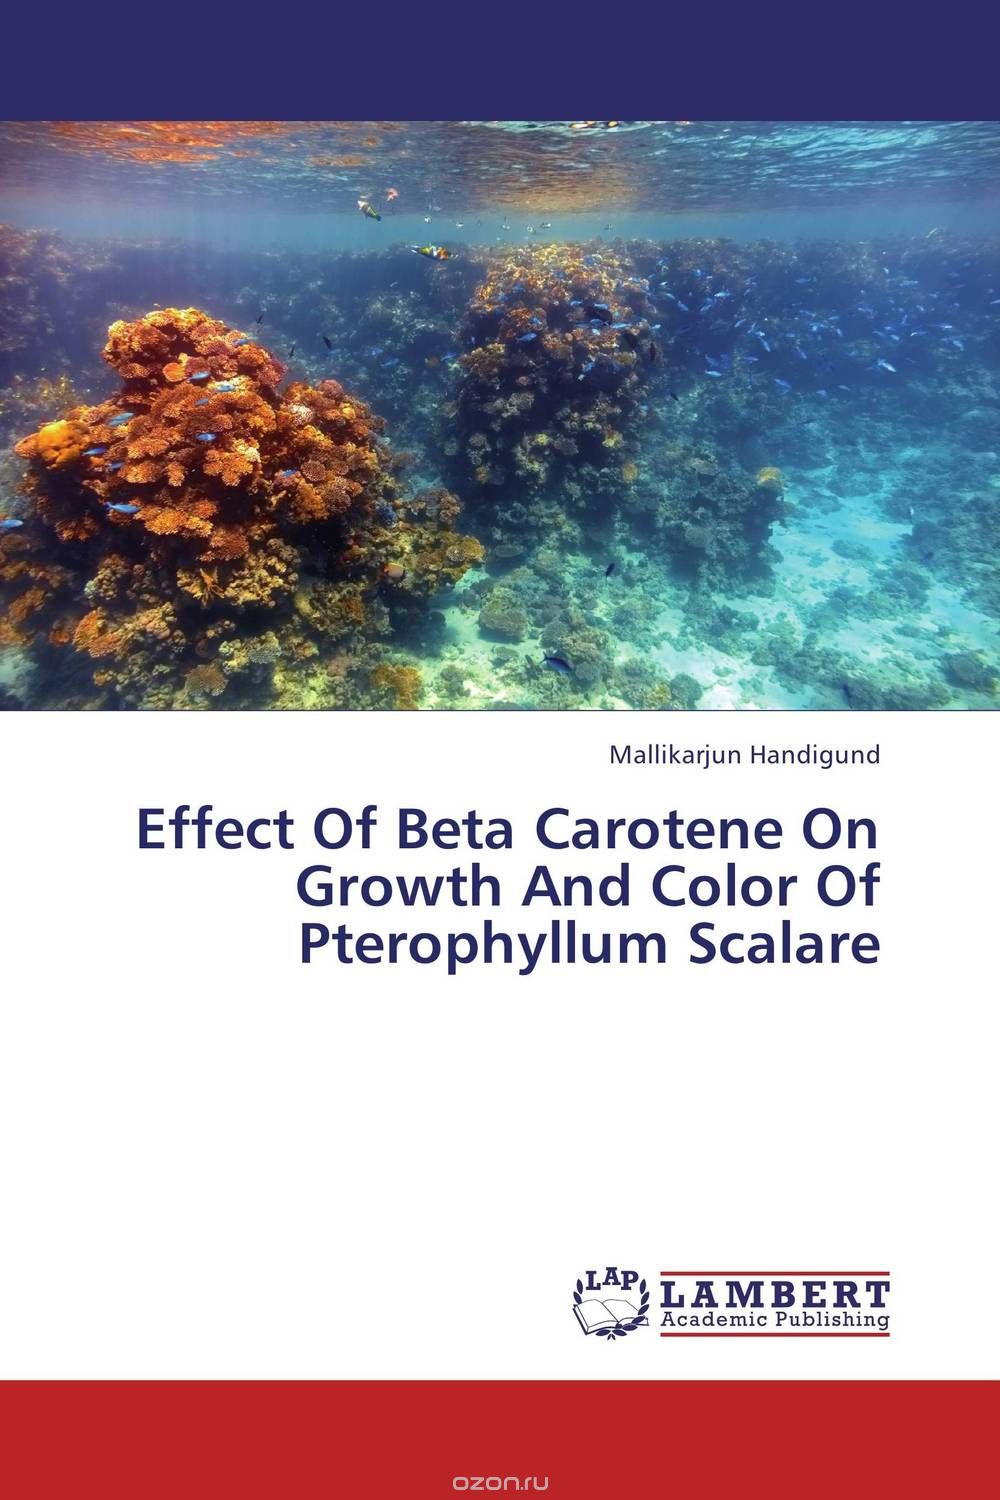 Скачать книгу "Effect Of Beta Carotene On Growth And Color Of Pterophyllum Scalare"